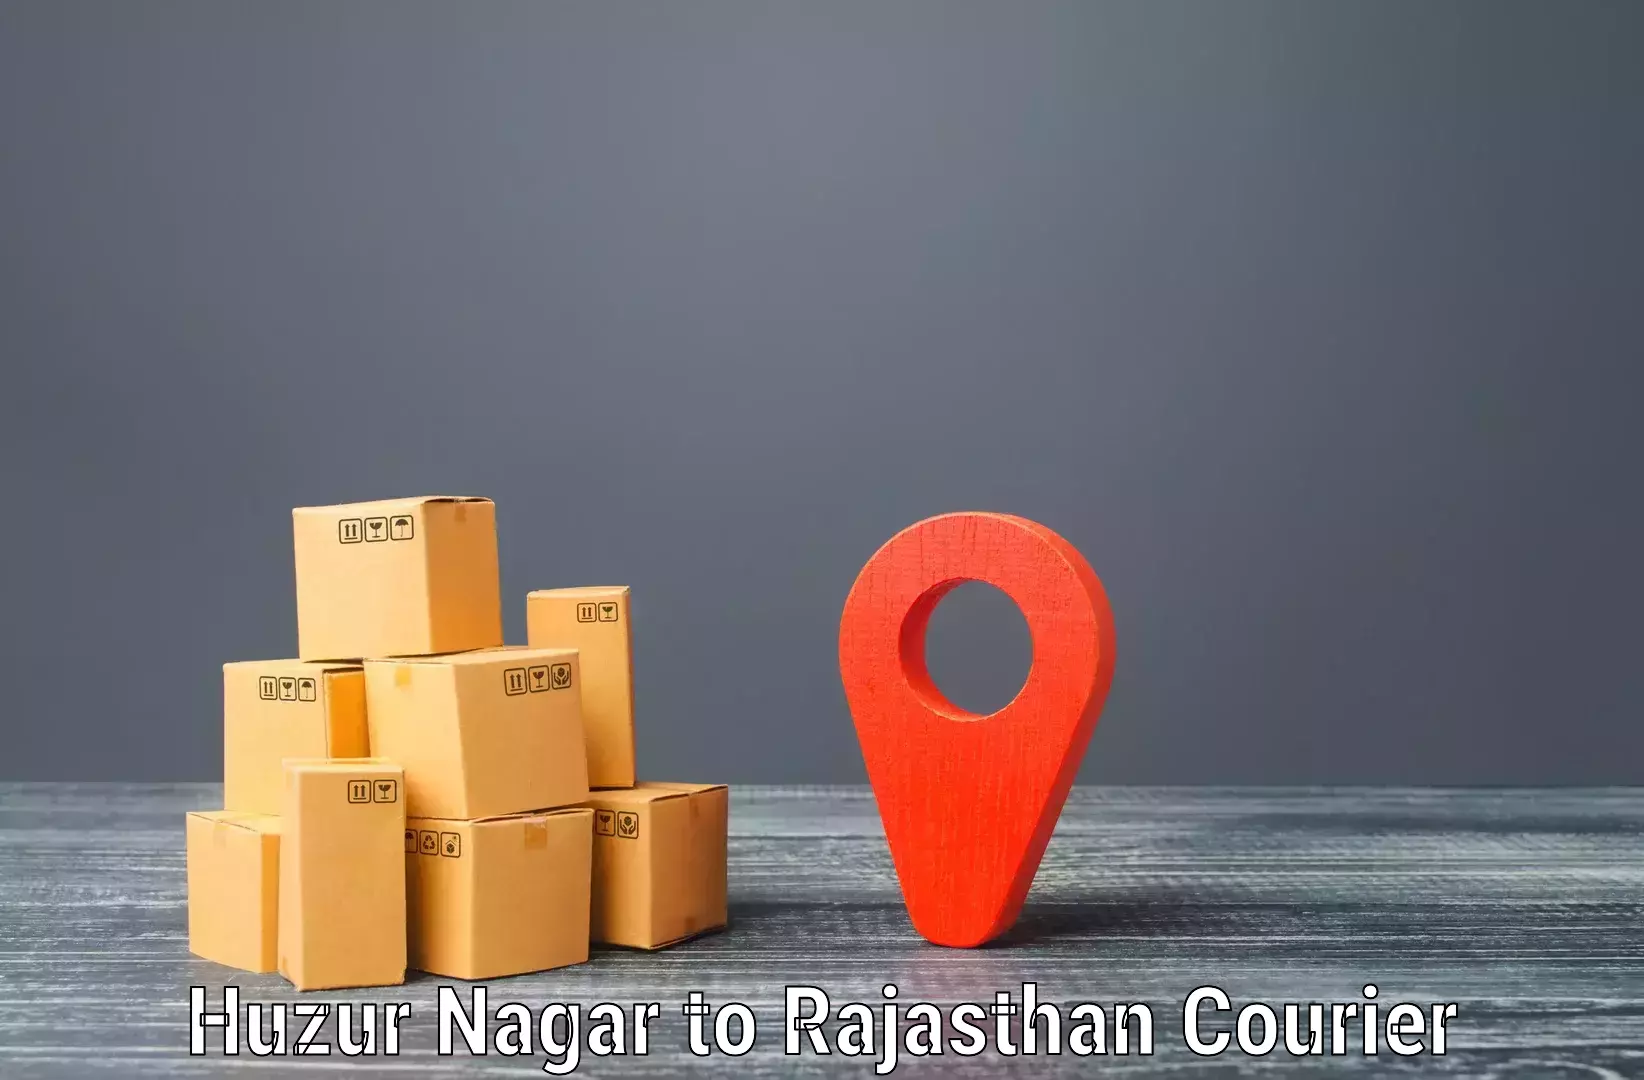 Quick dispatch service Huzur Nagar to Pokhran